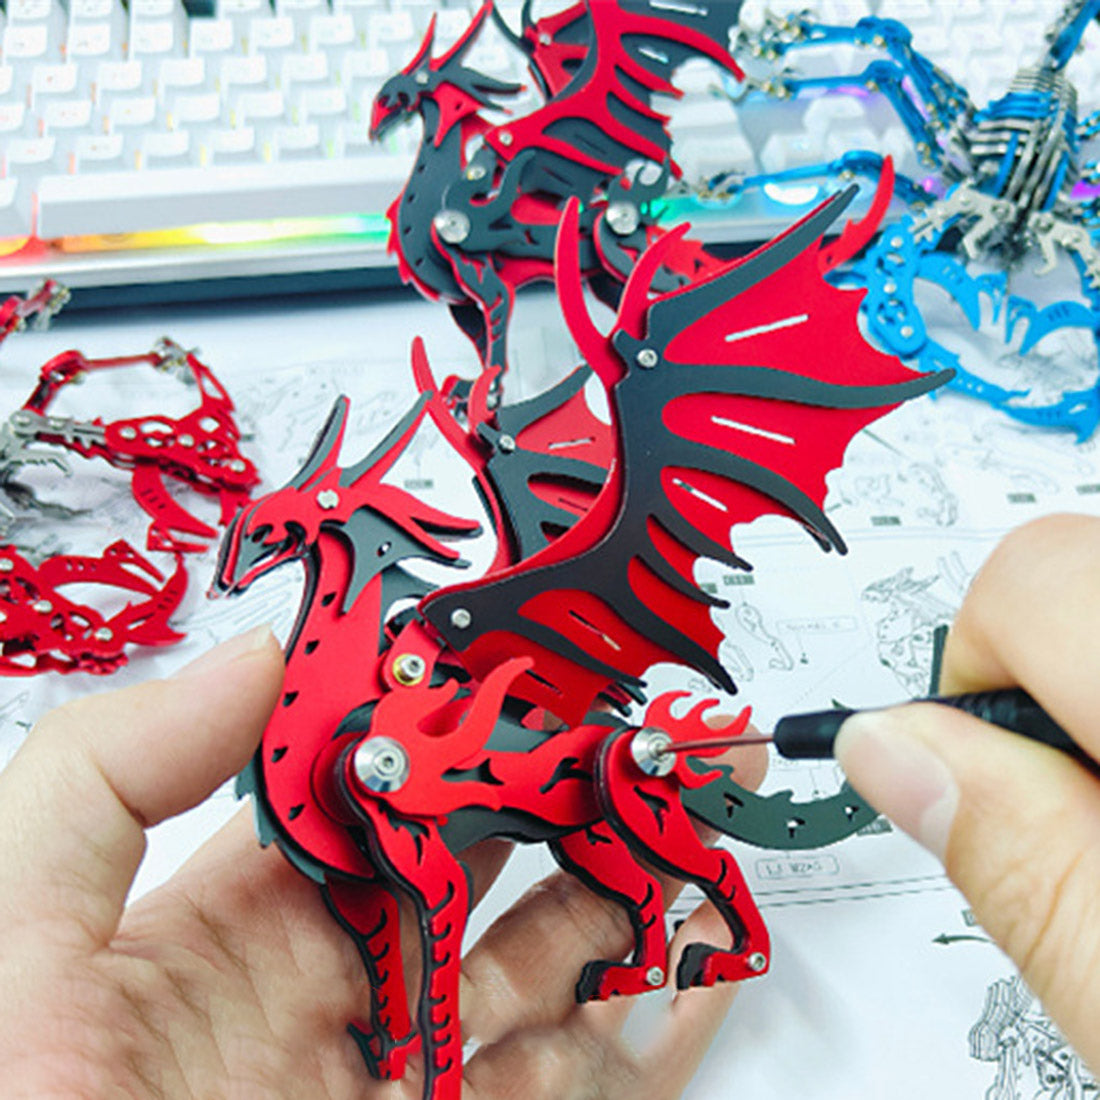 3D Metal Kits Magical Pterosaur DIY Mechanical Dragon Model 100+PCS